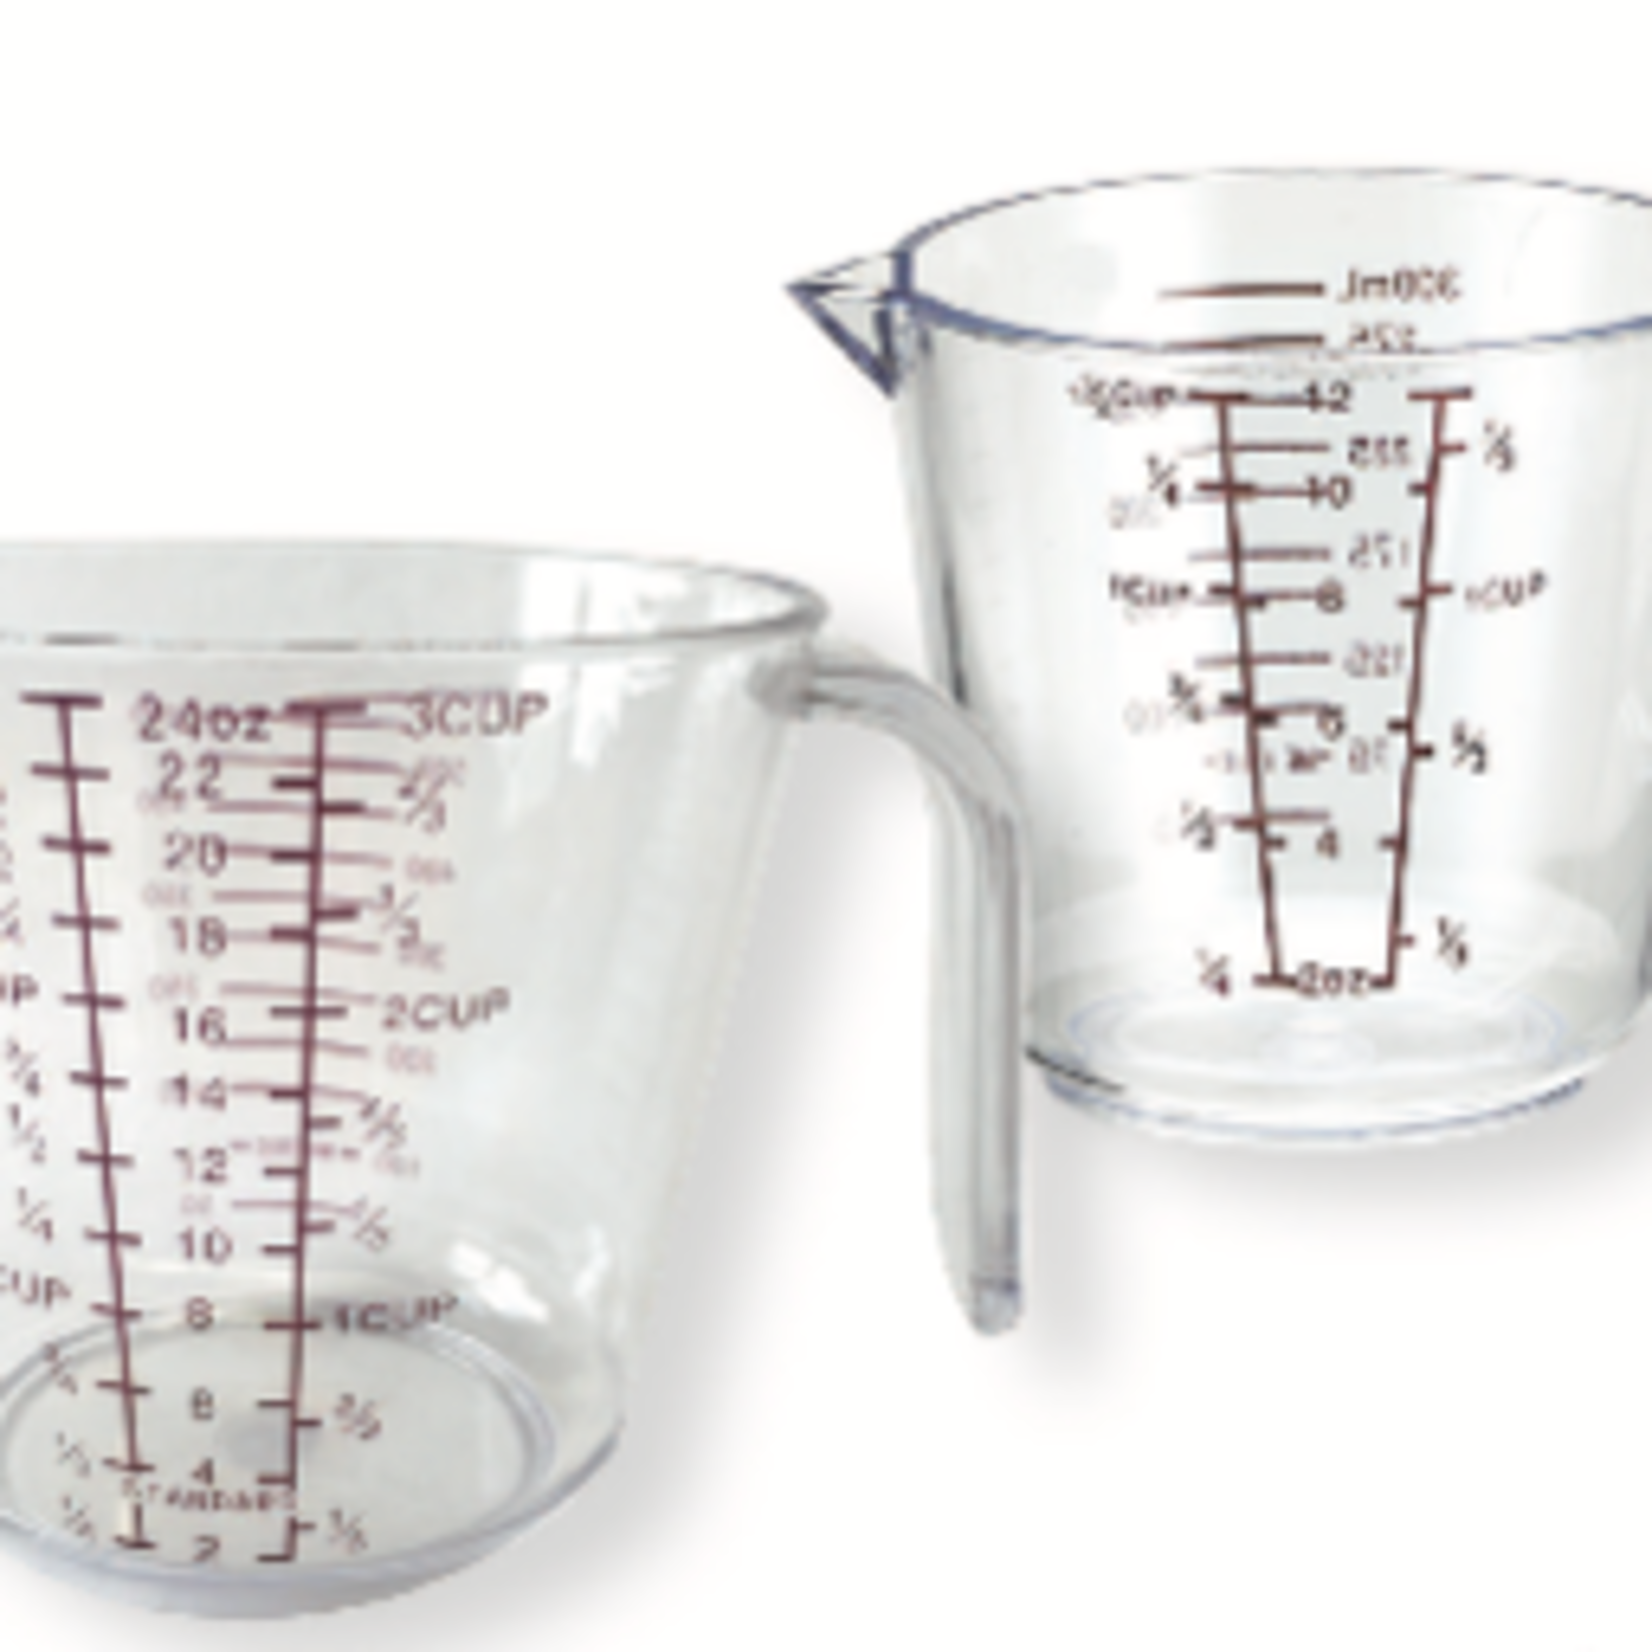 Better Housewares 24 oz. Measuring Cup - The Westview Shop